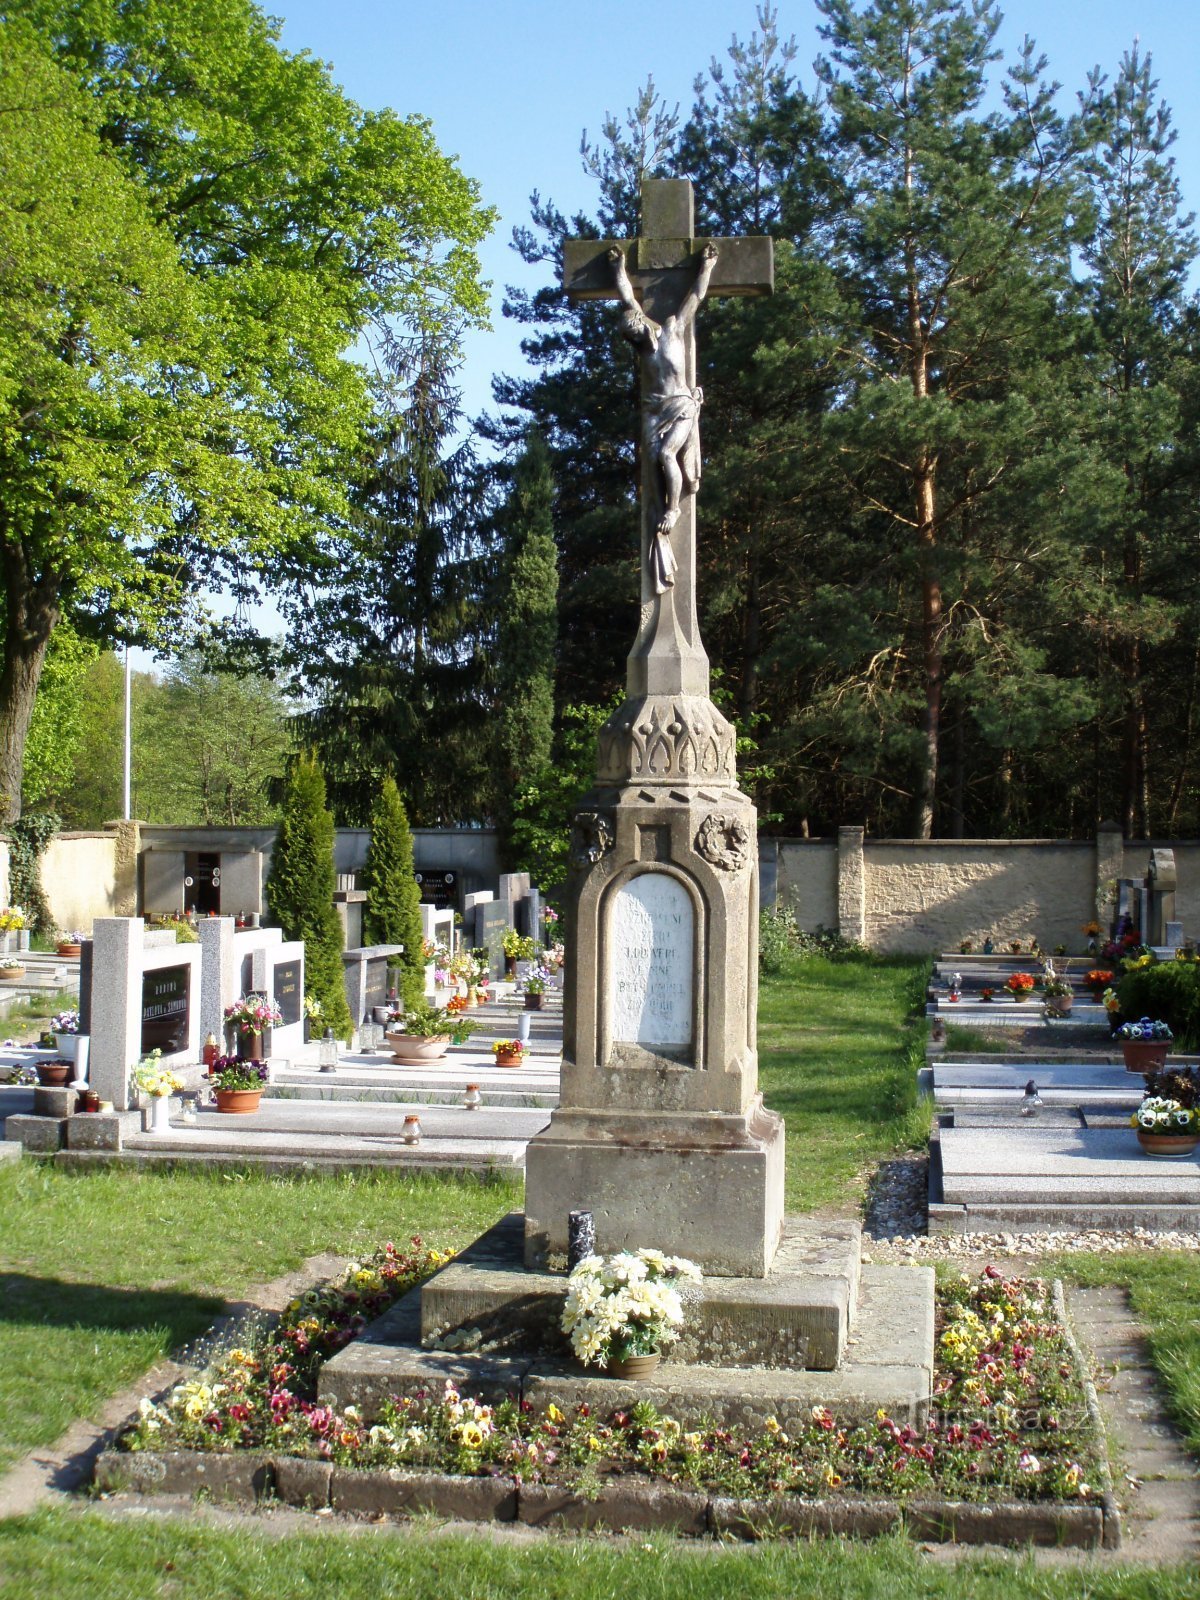 Croce del cimitero di Malšov Lhota (Hradec Králové, 25.4.2009/XNUMX/XNUMX)